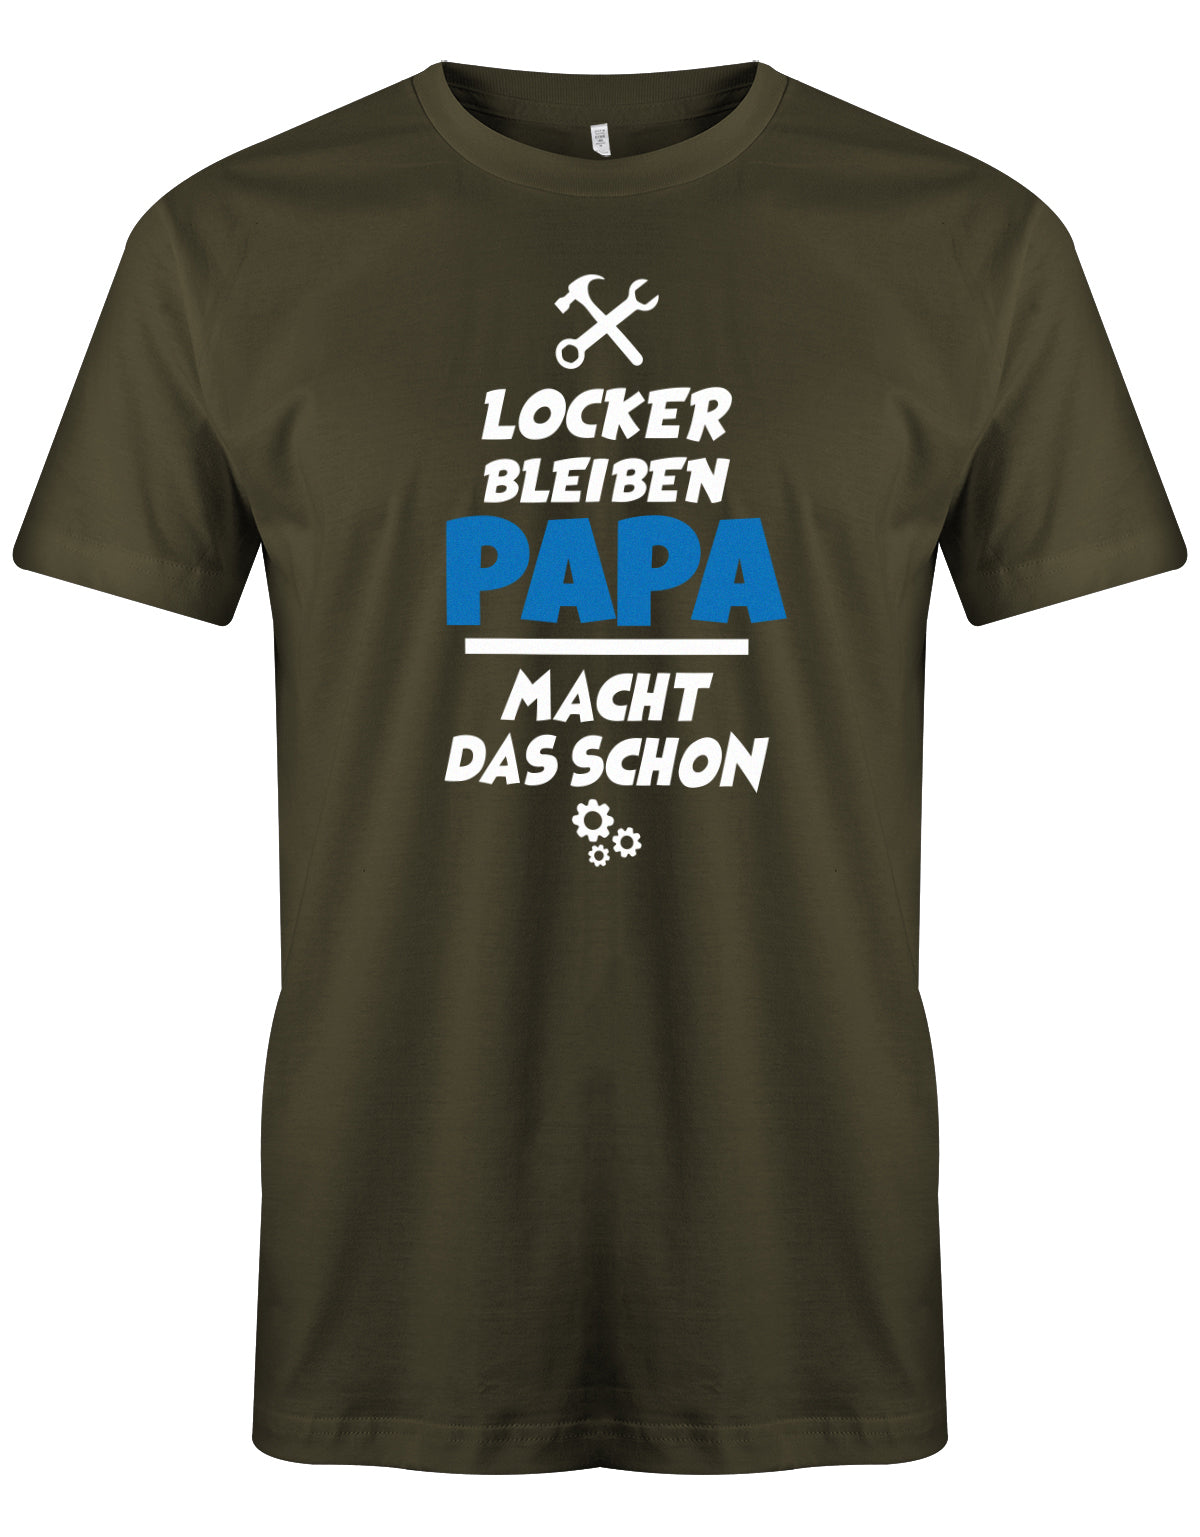 Papa T-Shirt - Locker bleiben Papa macht das schon Army